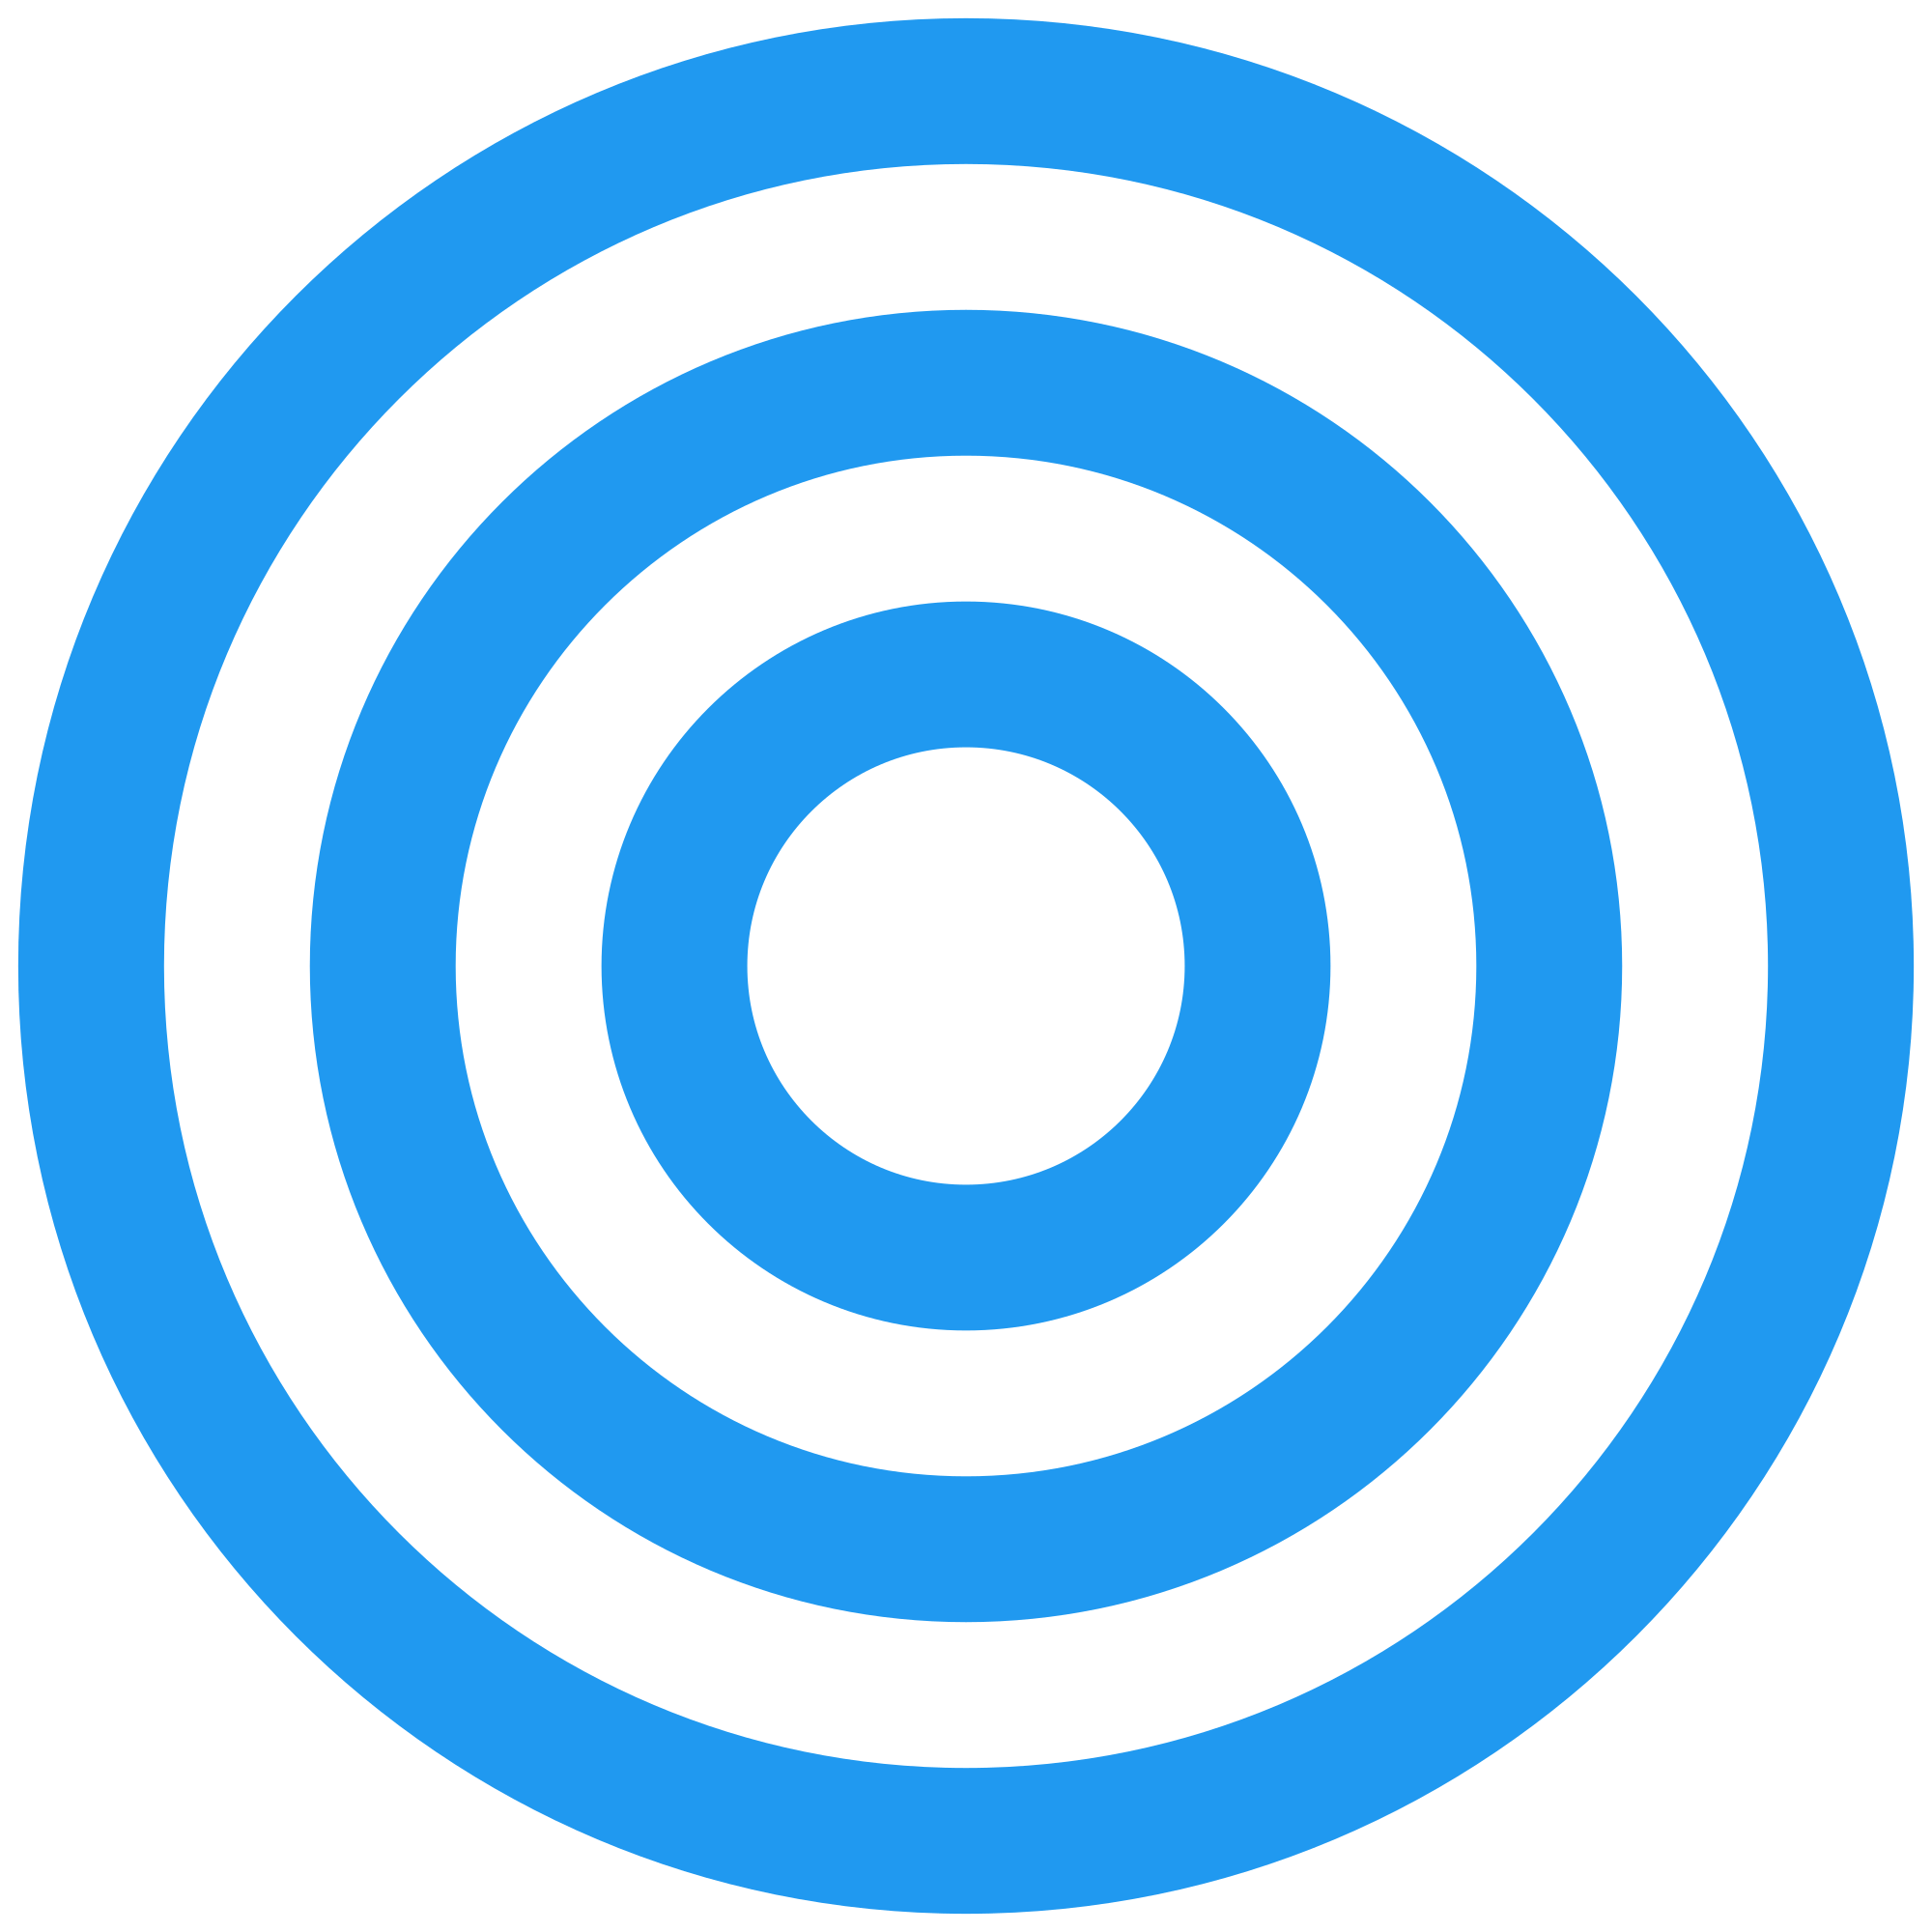 Blue with White Circle Logo - File:Urantia three-concentric-blue-circles-on-white symbol.svg ...